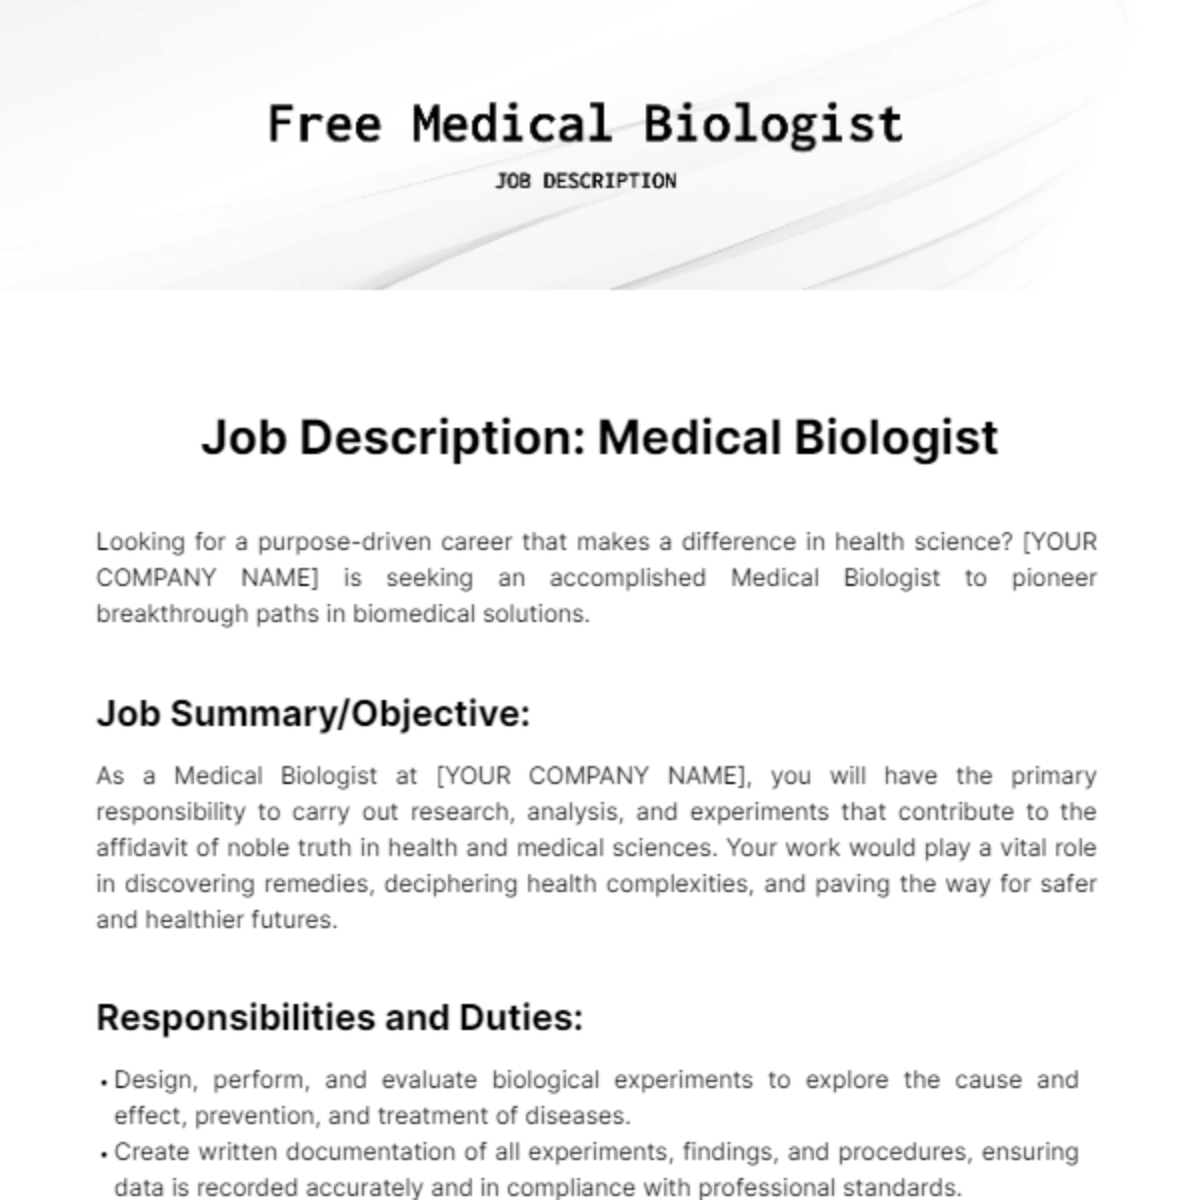 Free Medical Biologist Job Description Template